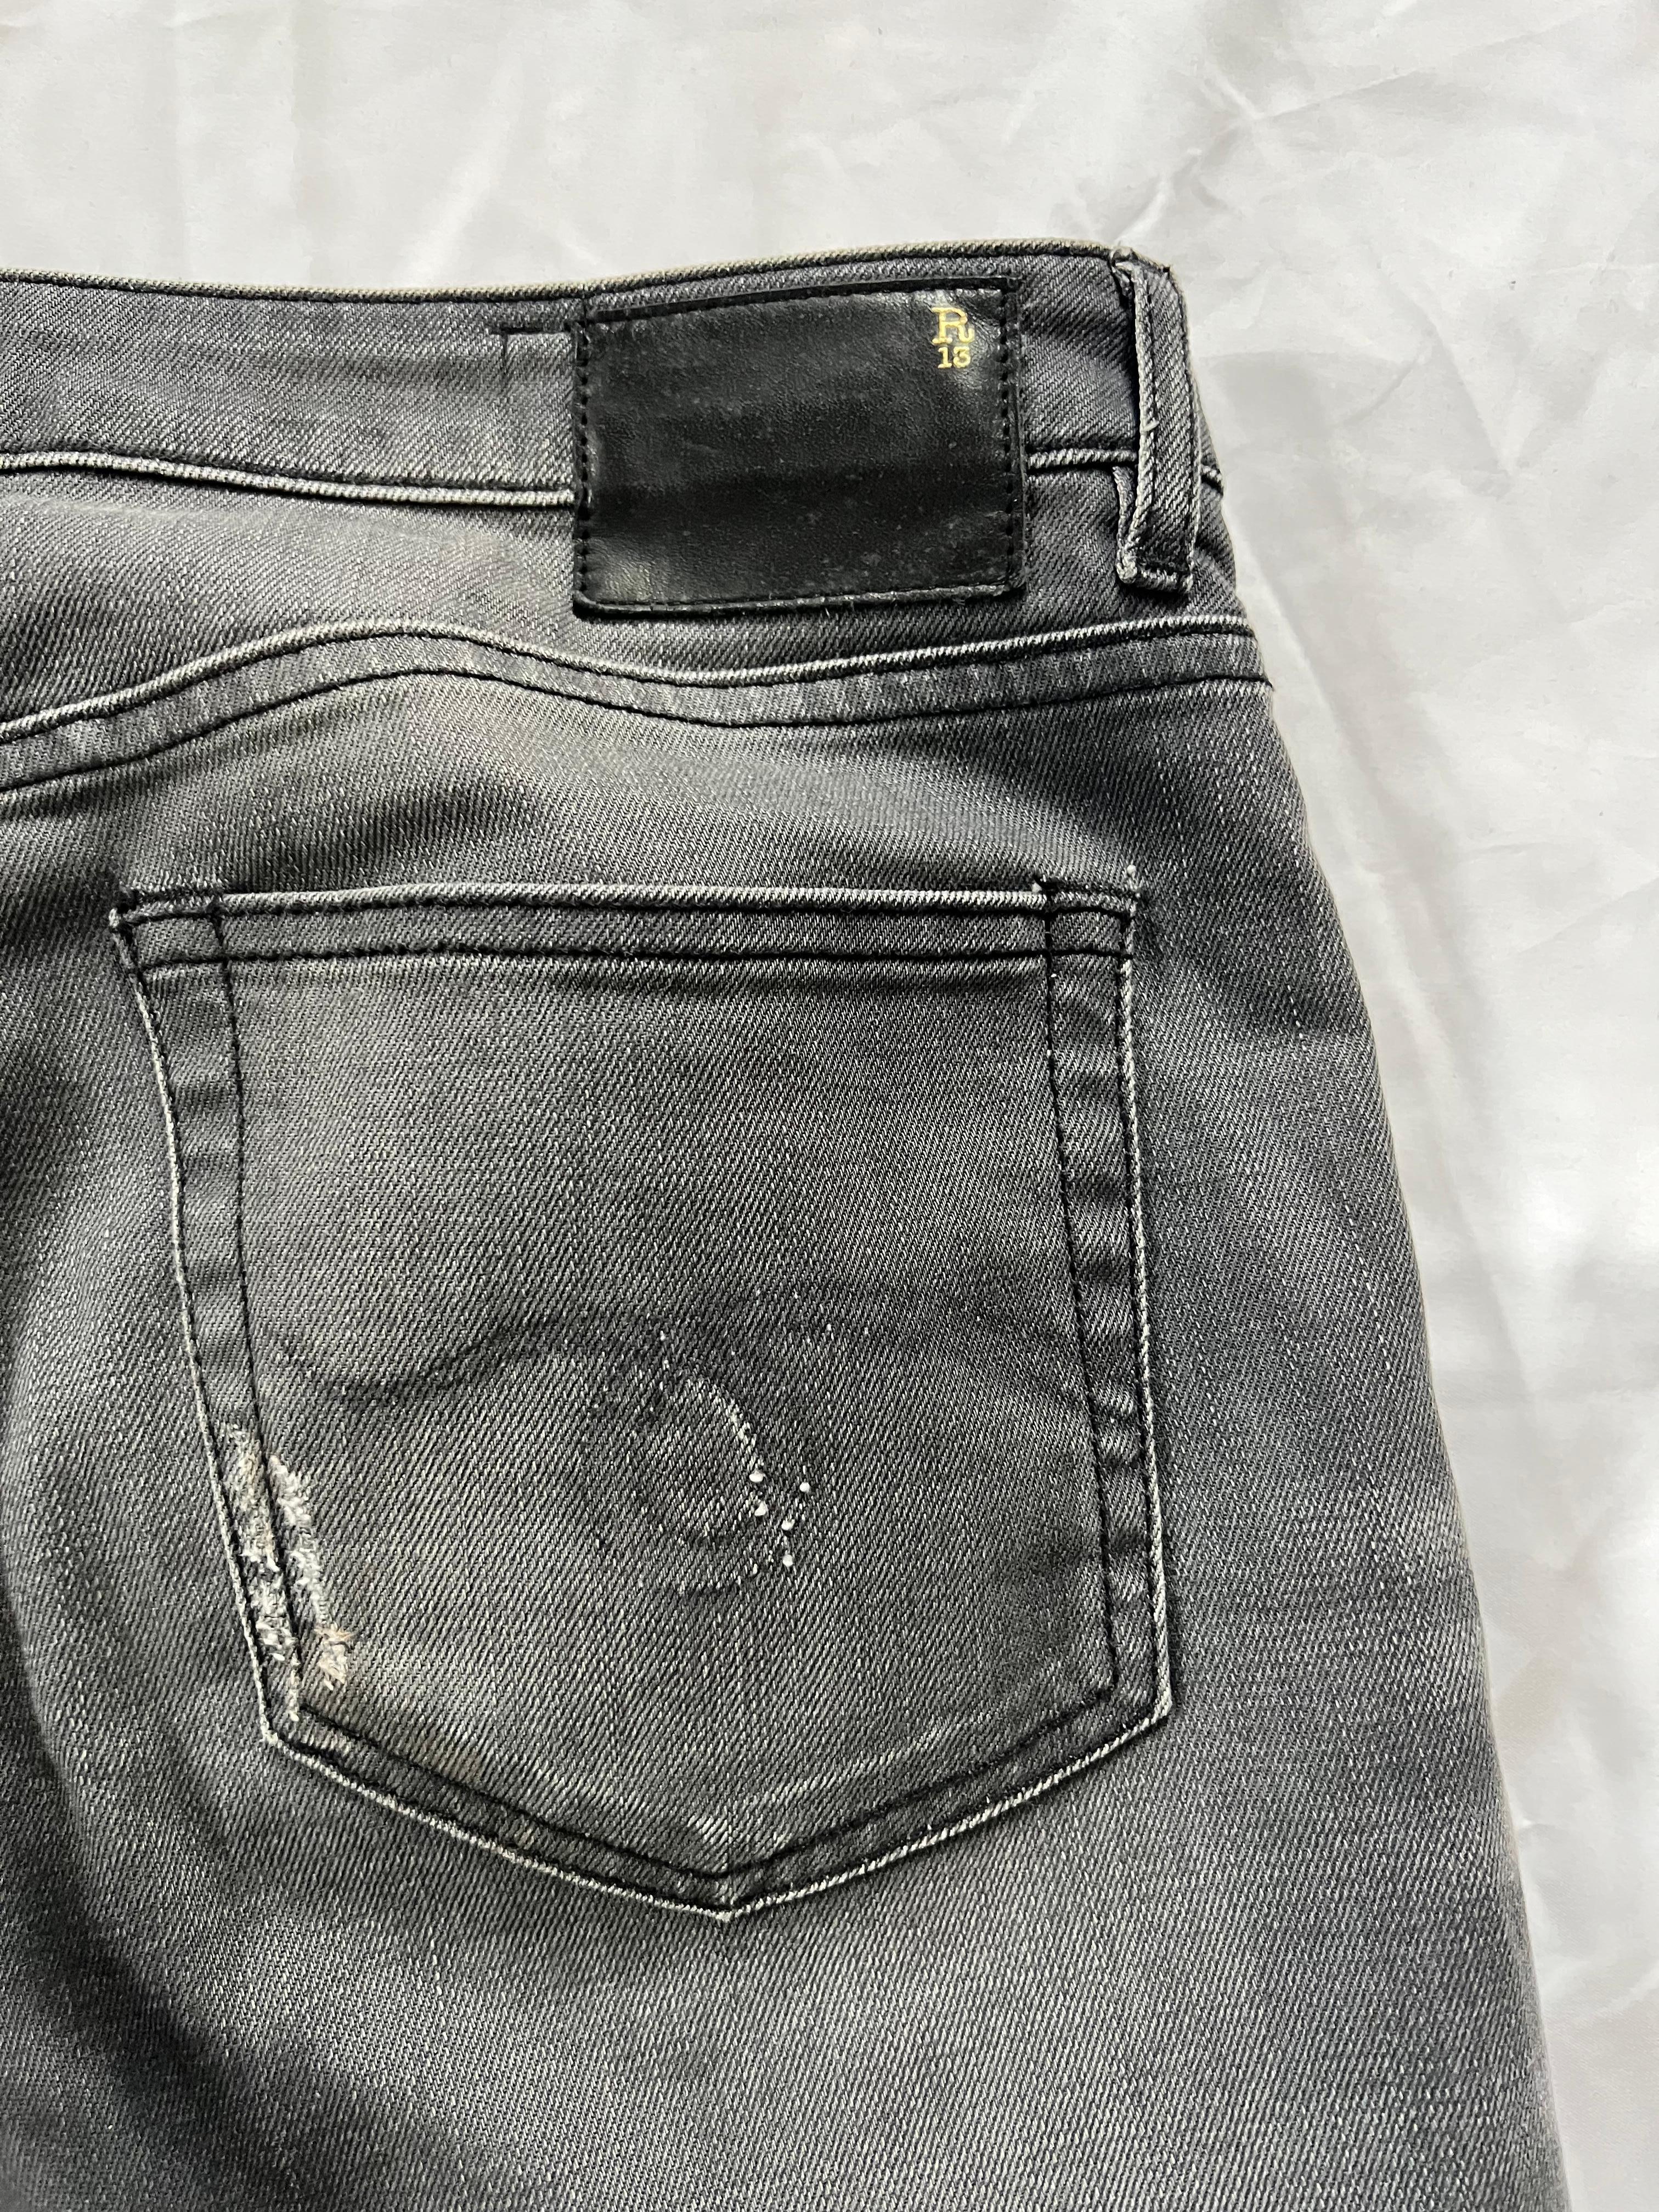 Women's R13 Grey Orion Boy Skinny Jeans Pants, Size 27 For Sale